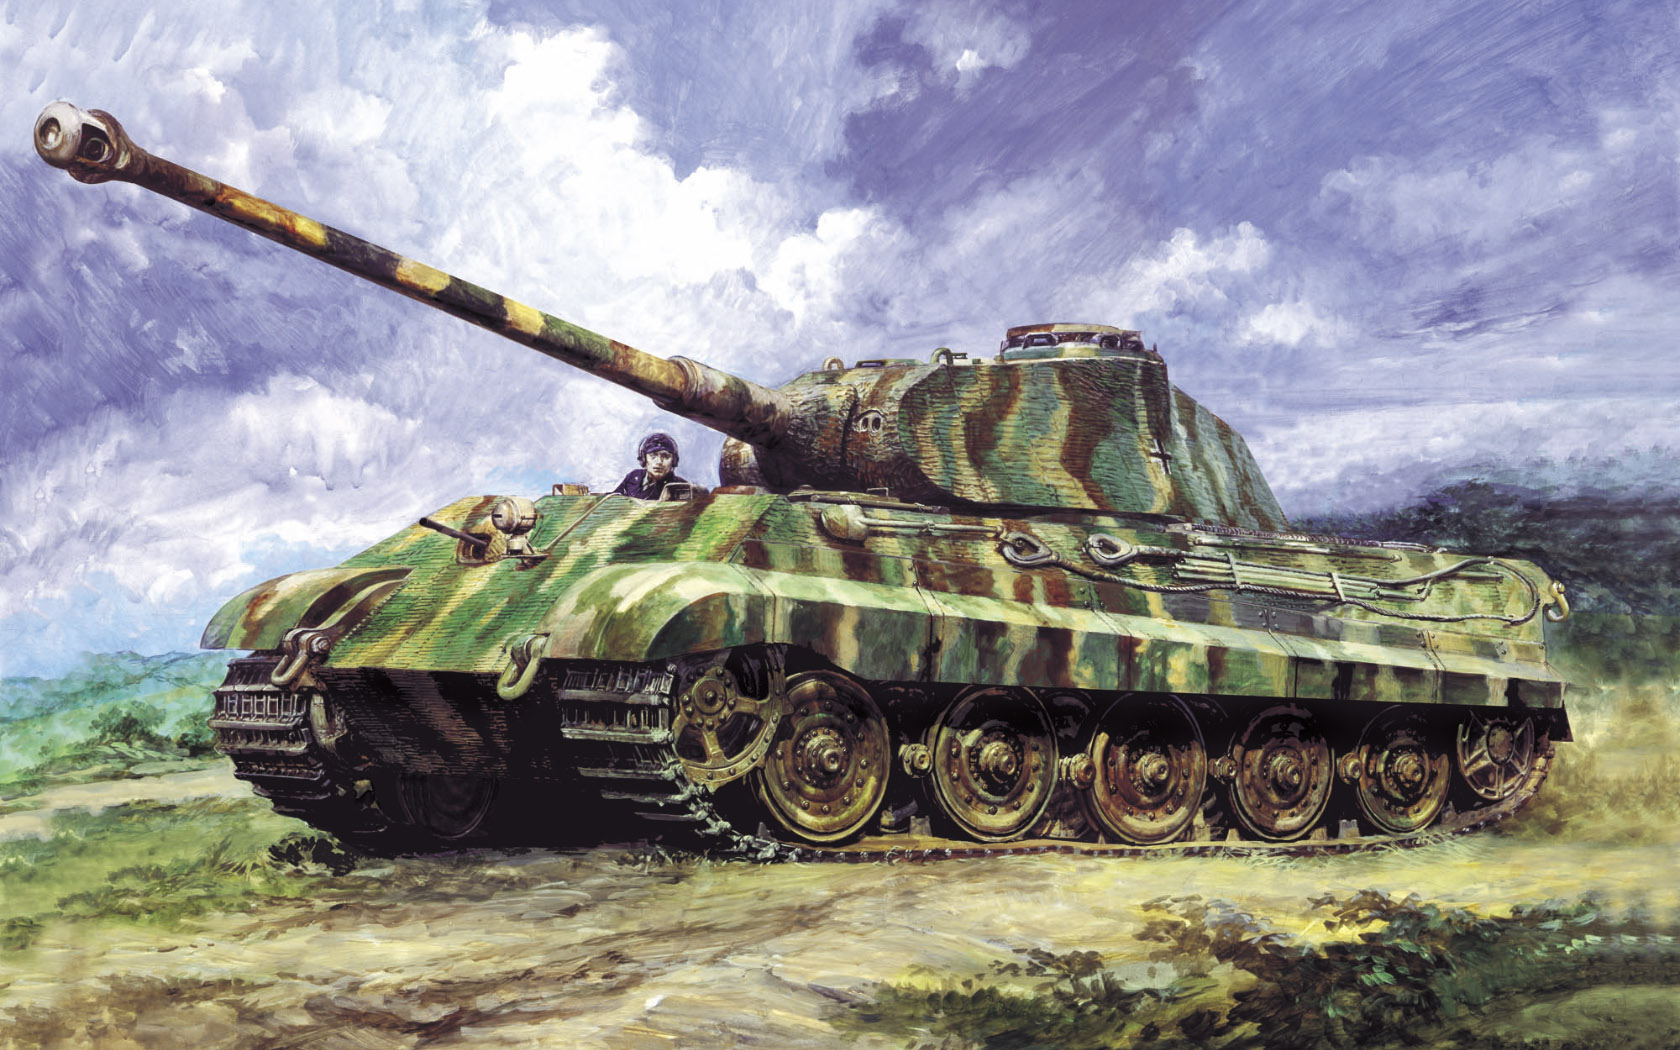 General 1680x1050 tank army military military vehicle sky clouds artwork soldier helmet Tiger II